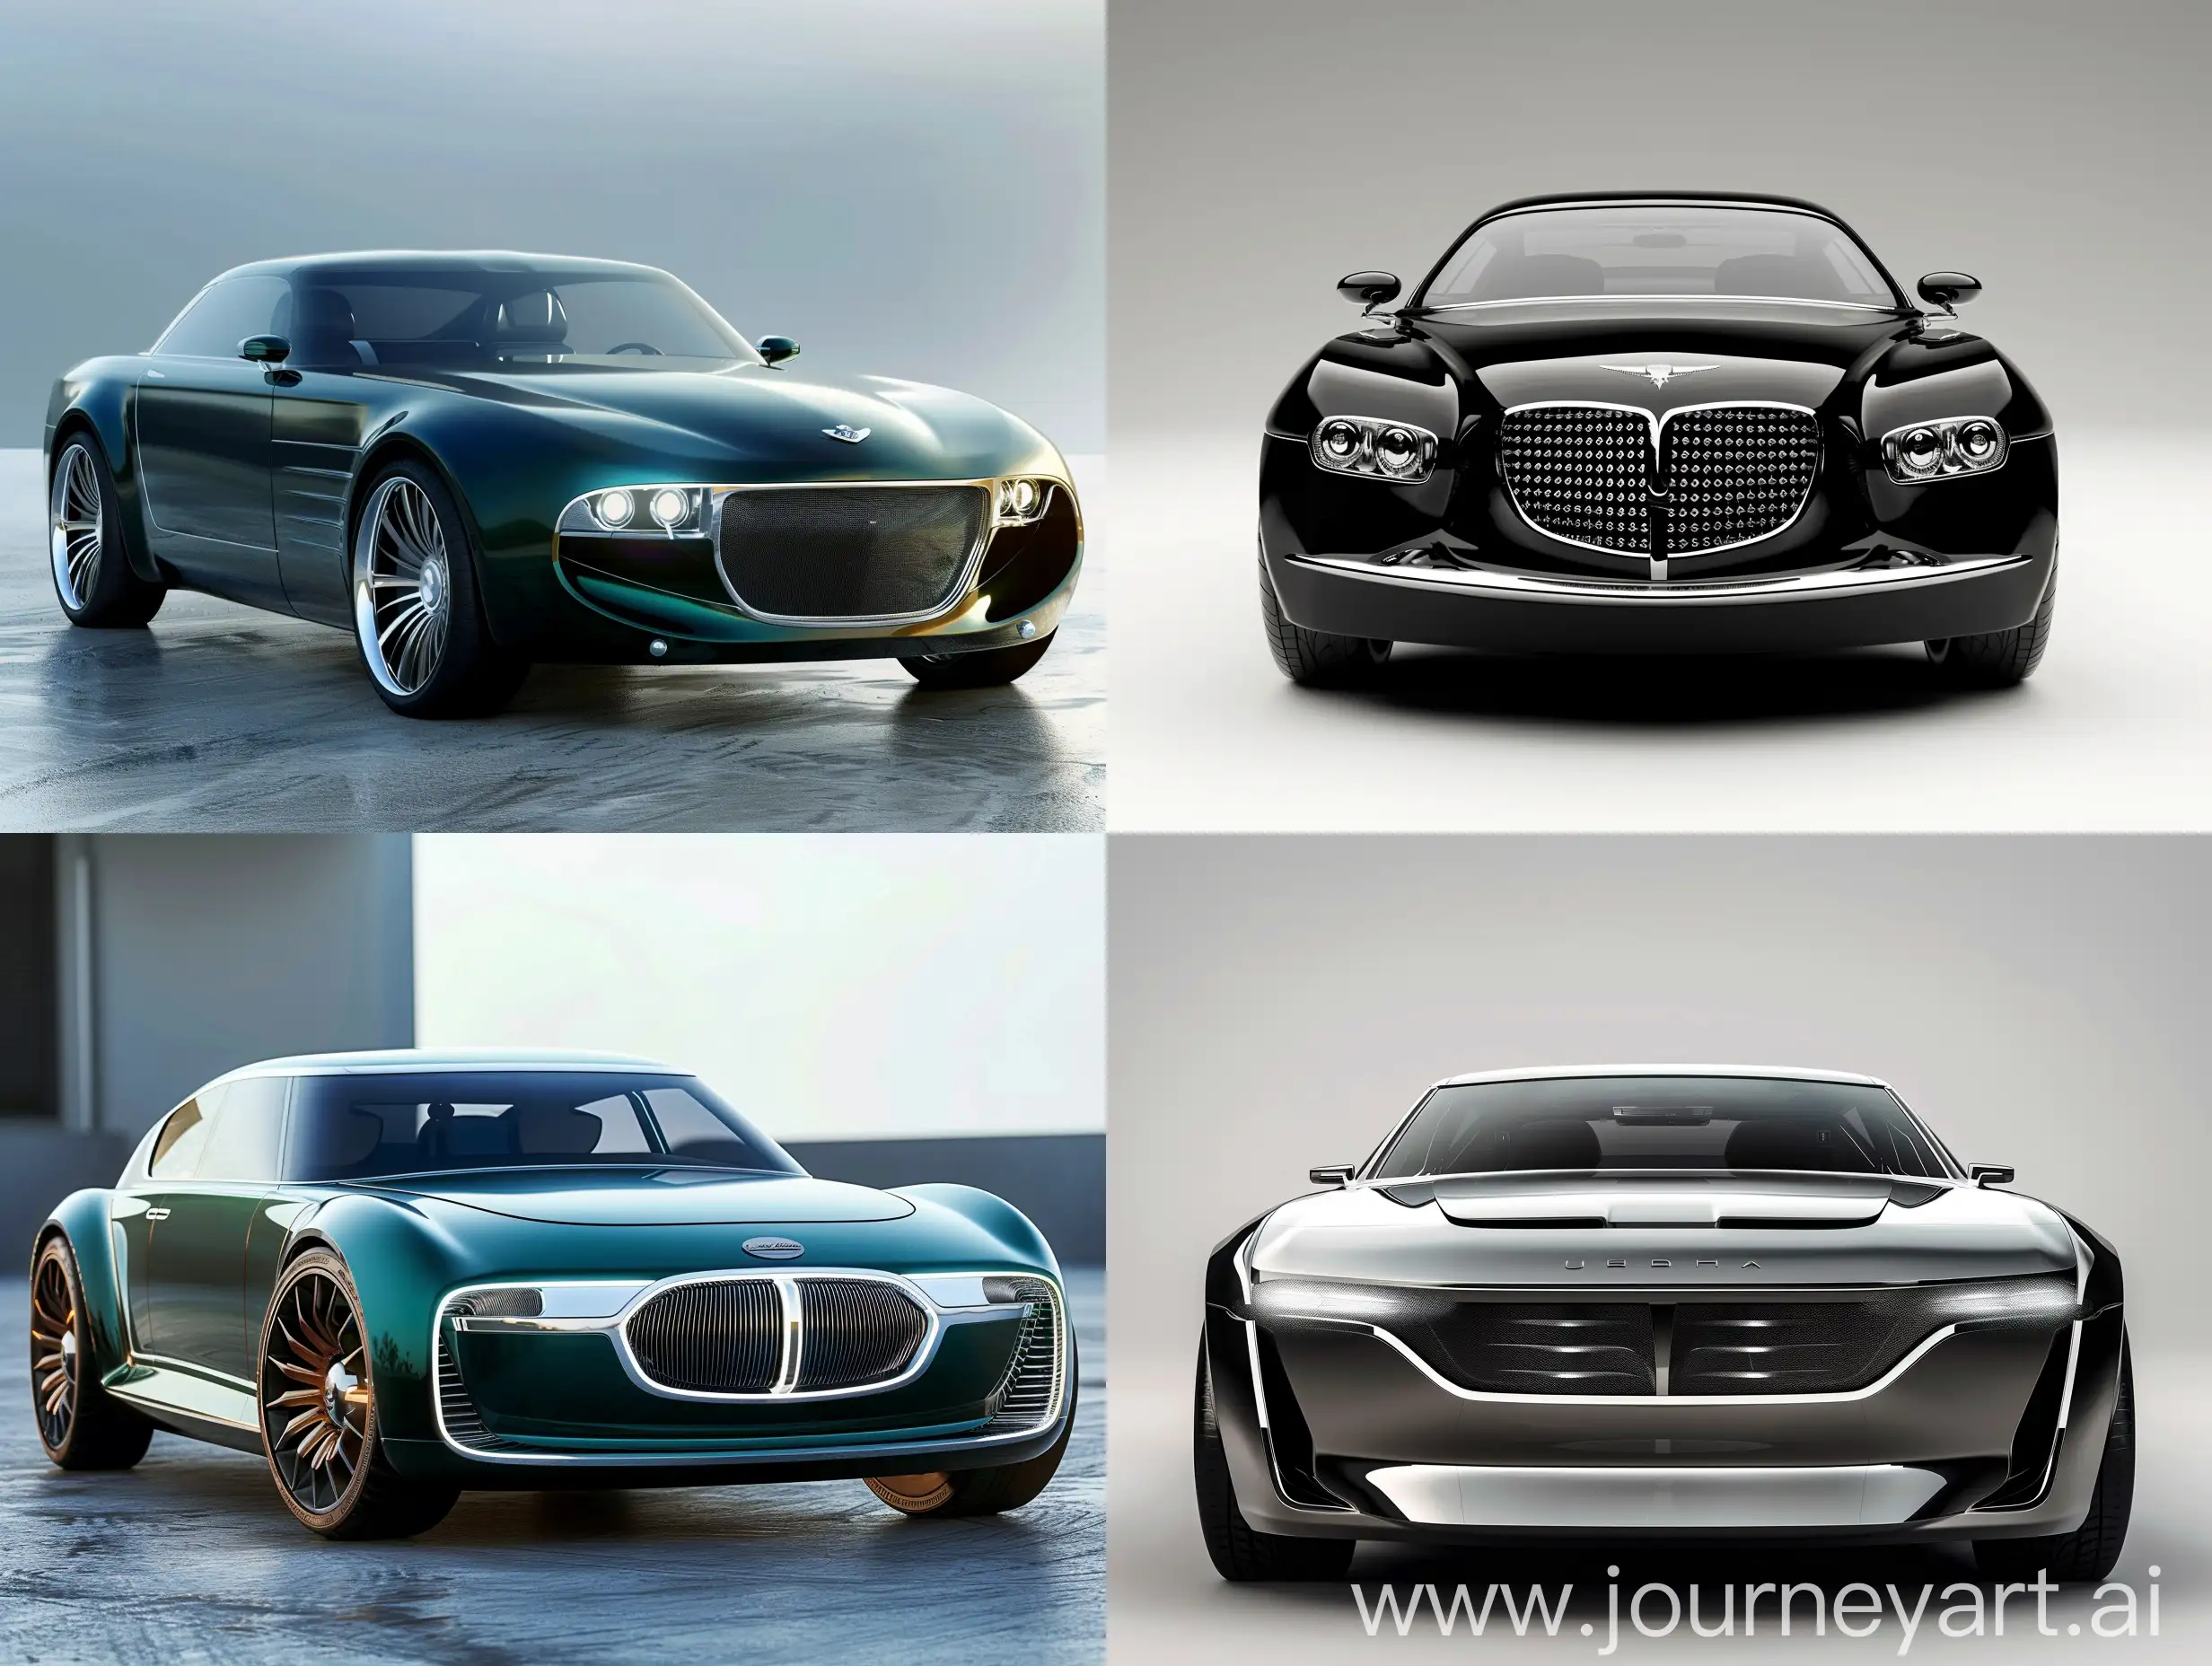 Futuristic-Redesigned-Hindustan-Motors-Ambassador-Sedan-Car-with-Elegant-Front-View